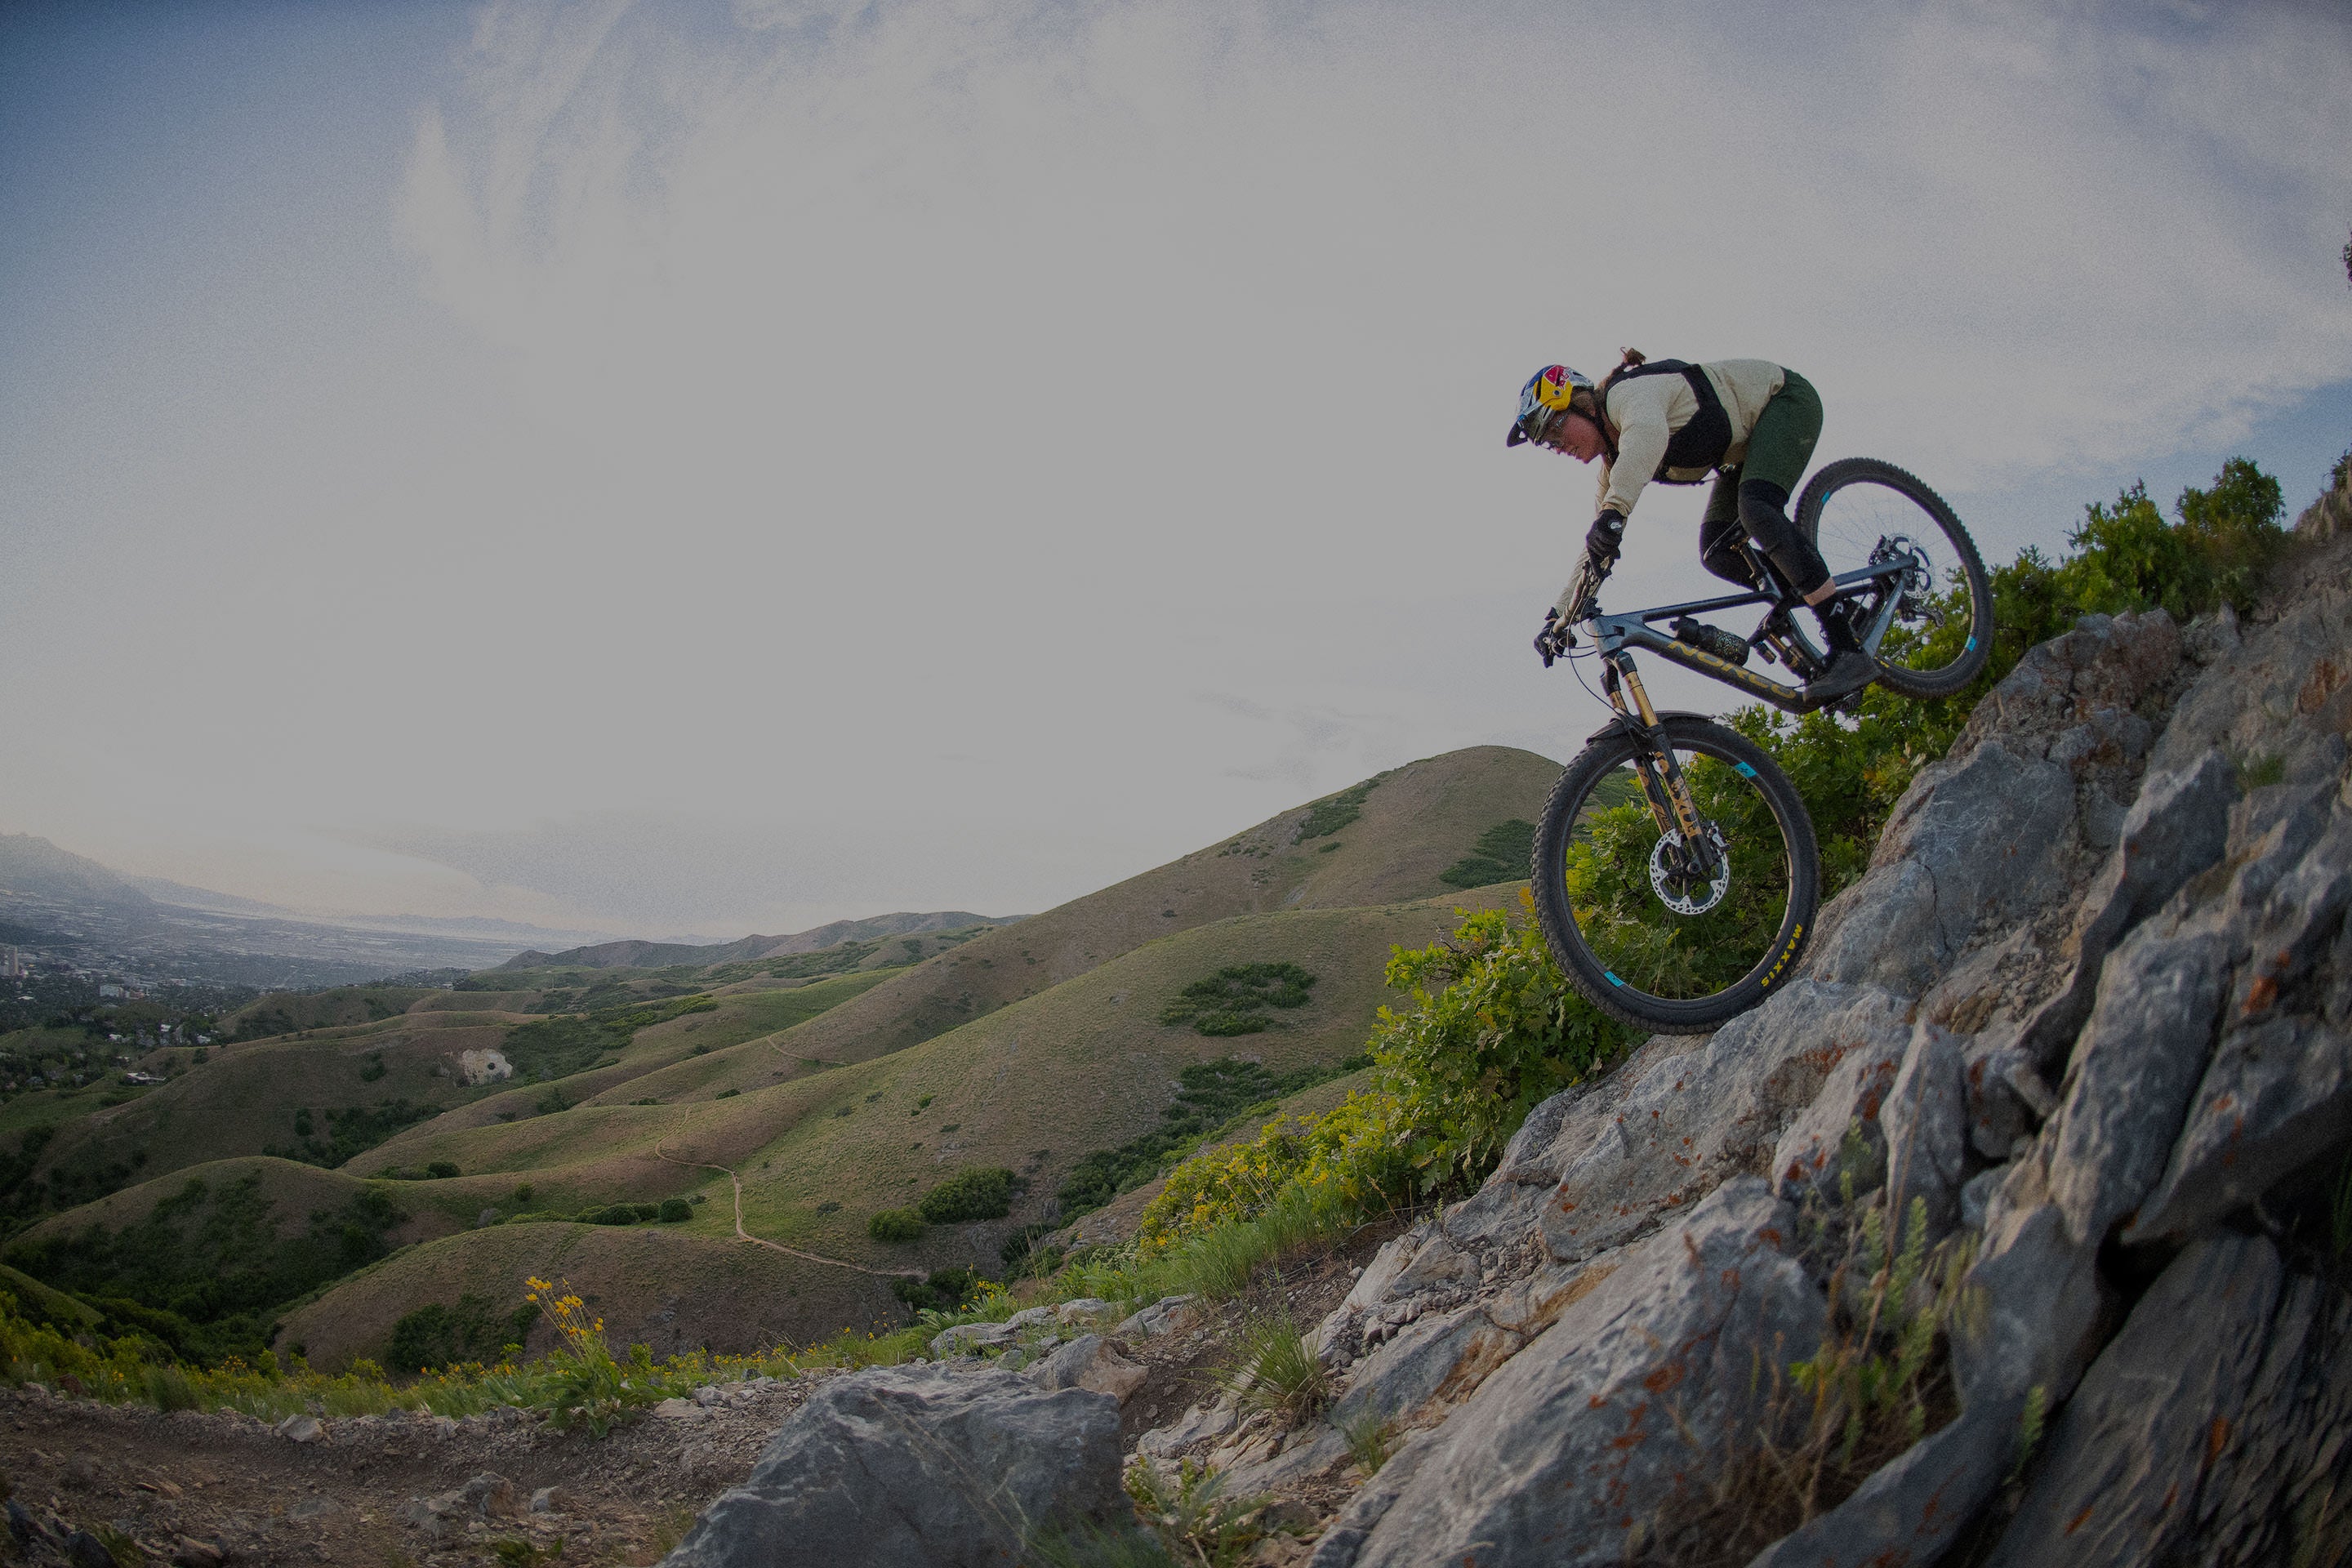 Mike Emery riding bike down a rock side of a mountain in Utah